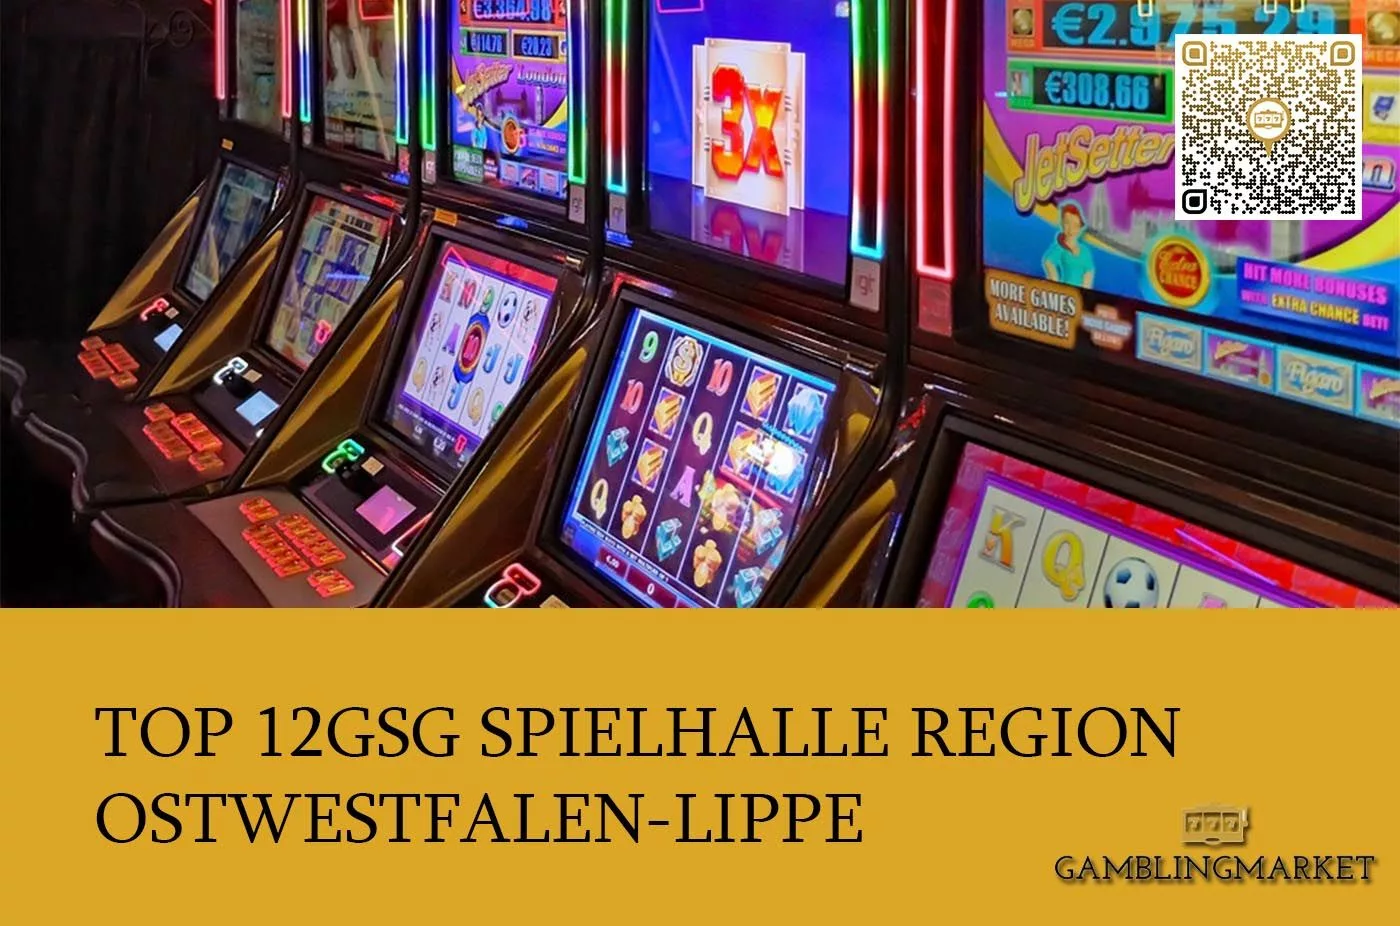 Top 12GSG Spielhalle Region Ostwestfalen-Lippe